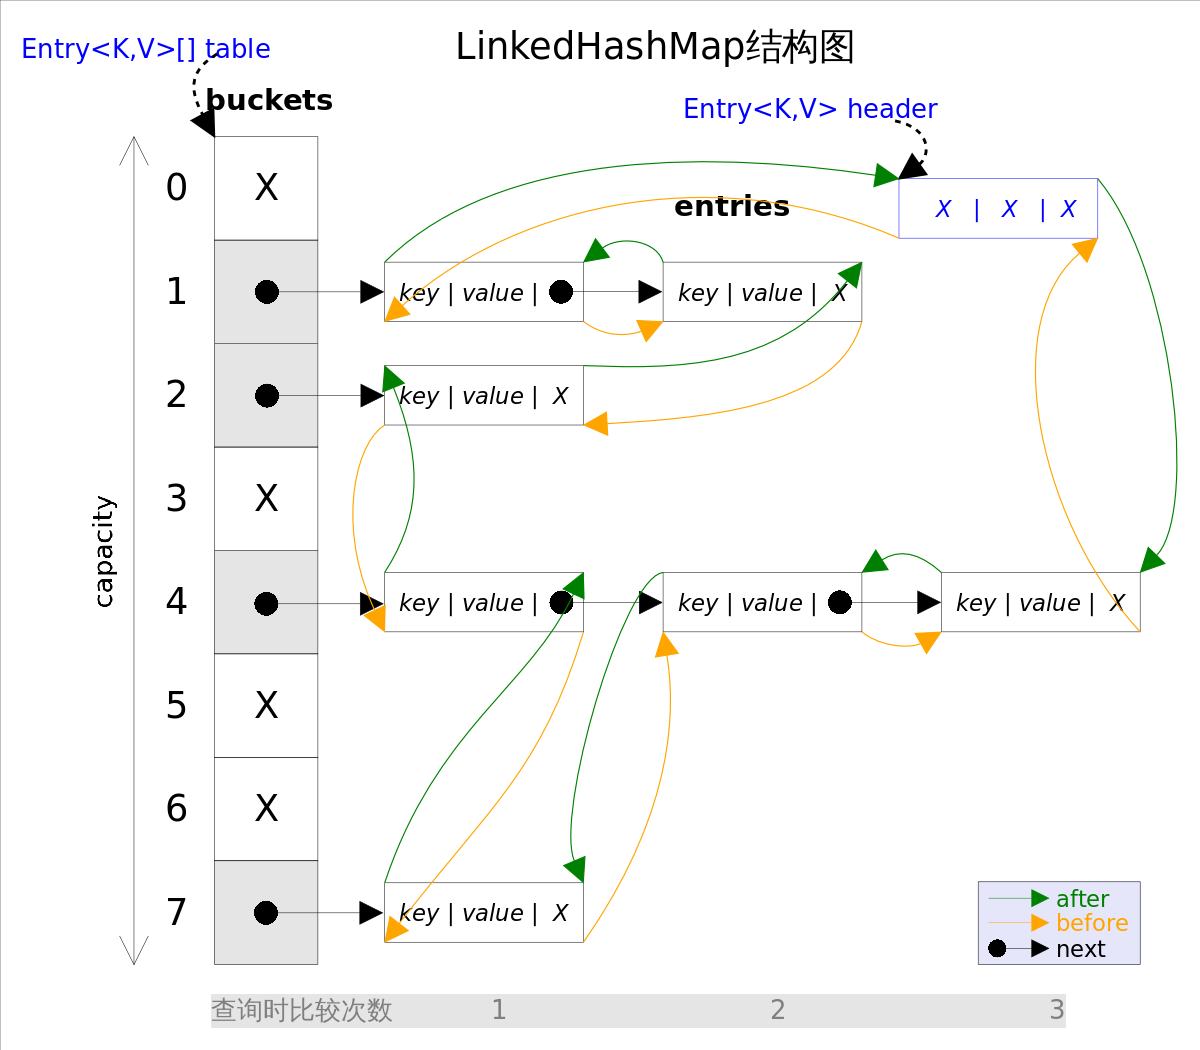 LinkedHashMap-structure